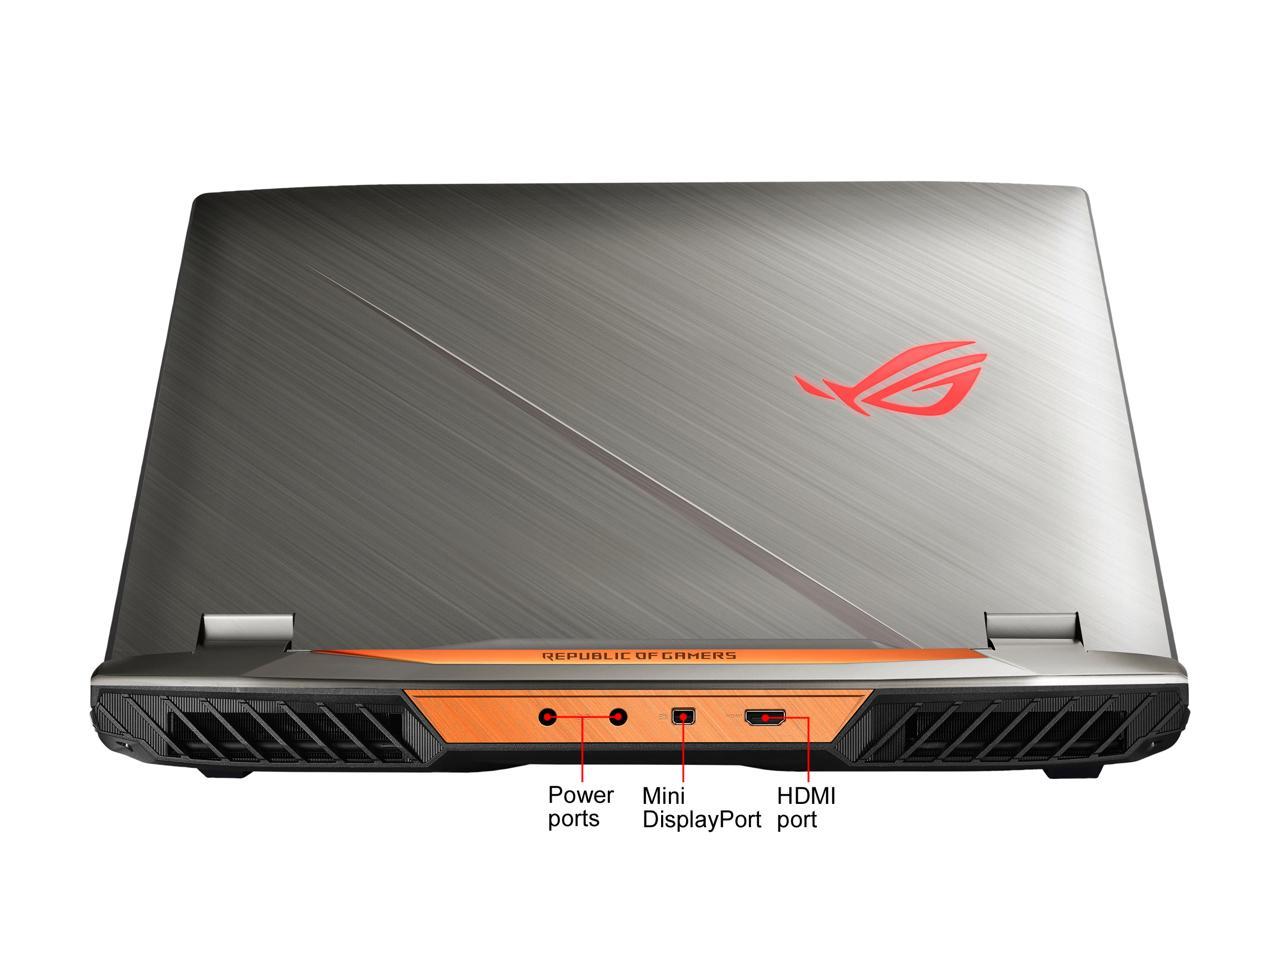 Asus Rog G703gx 2019 Gaming Laptop 173” Full Hd 144hz G Sync